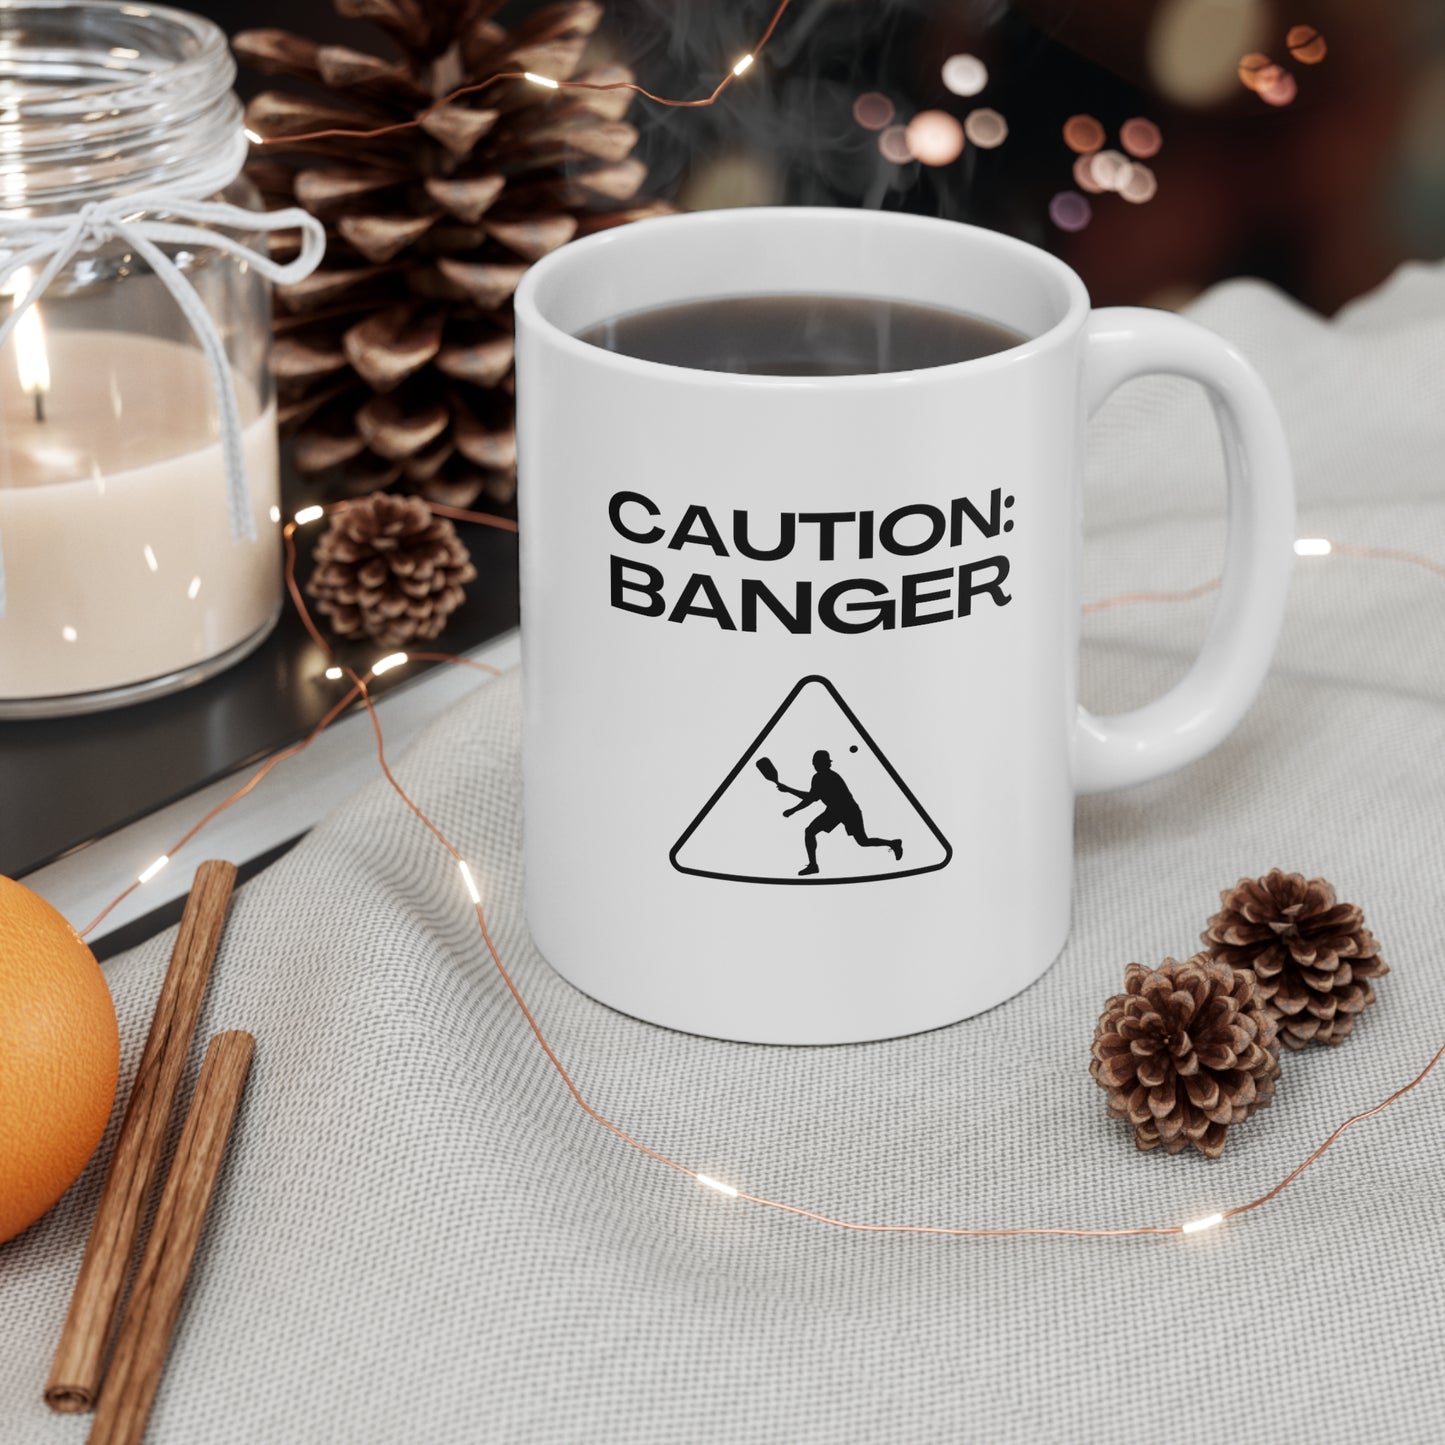 Caution: Banger 11 Oz White Coffee Mug